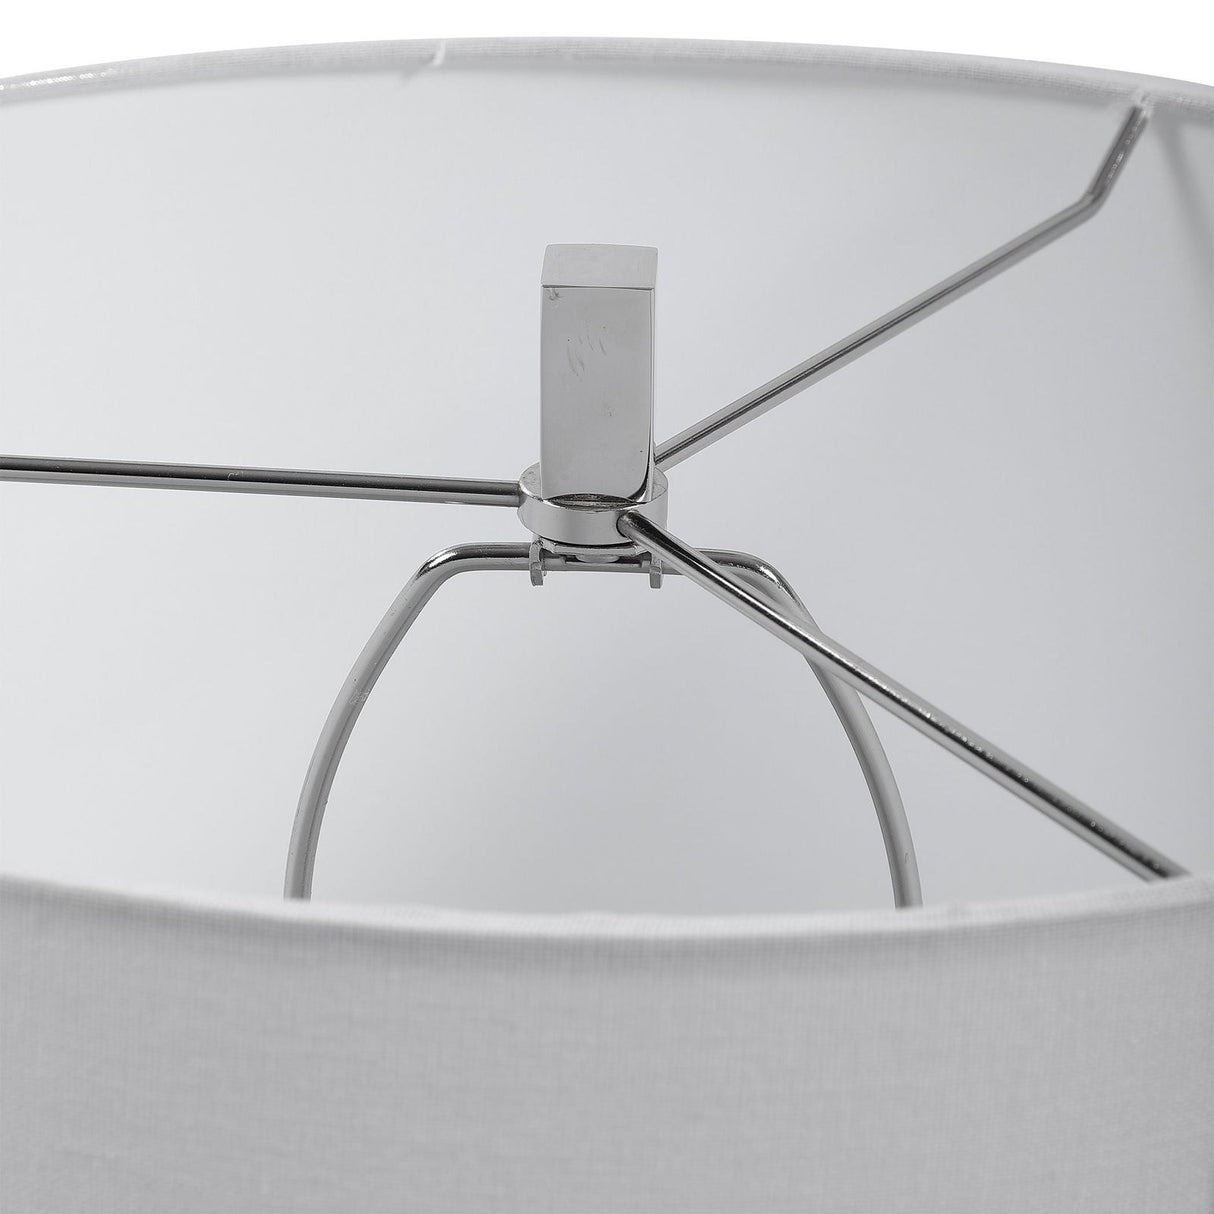 Uttermost Cordata Modern Lodge Table Lamp - Home Elegance USA